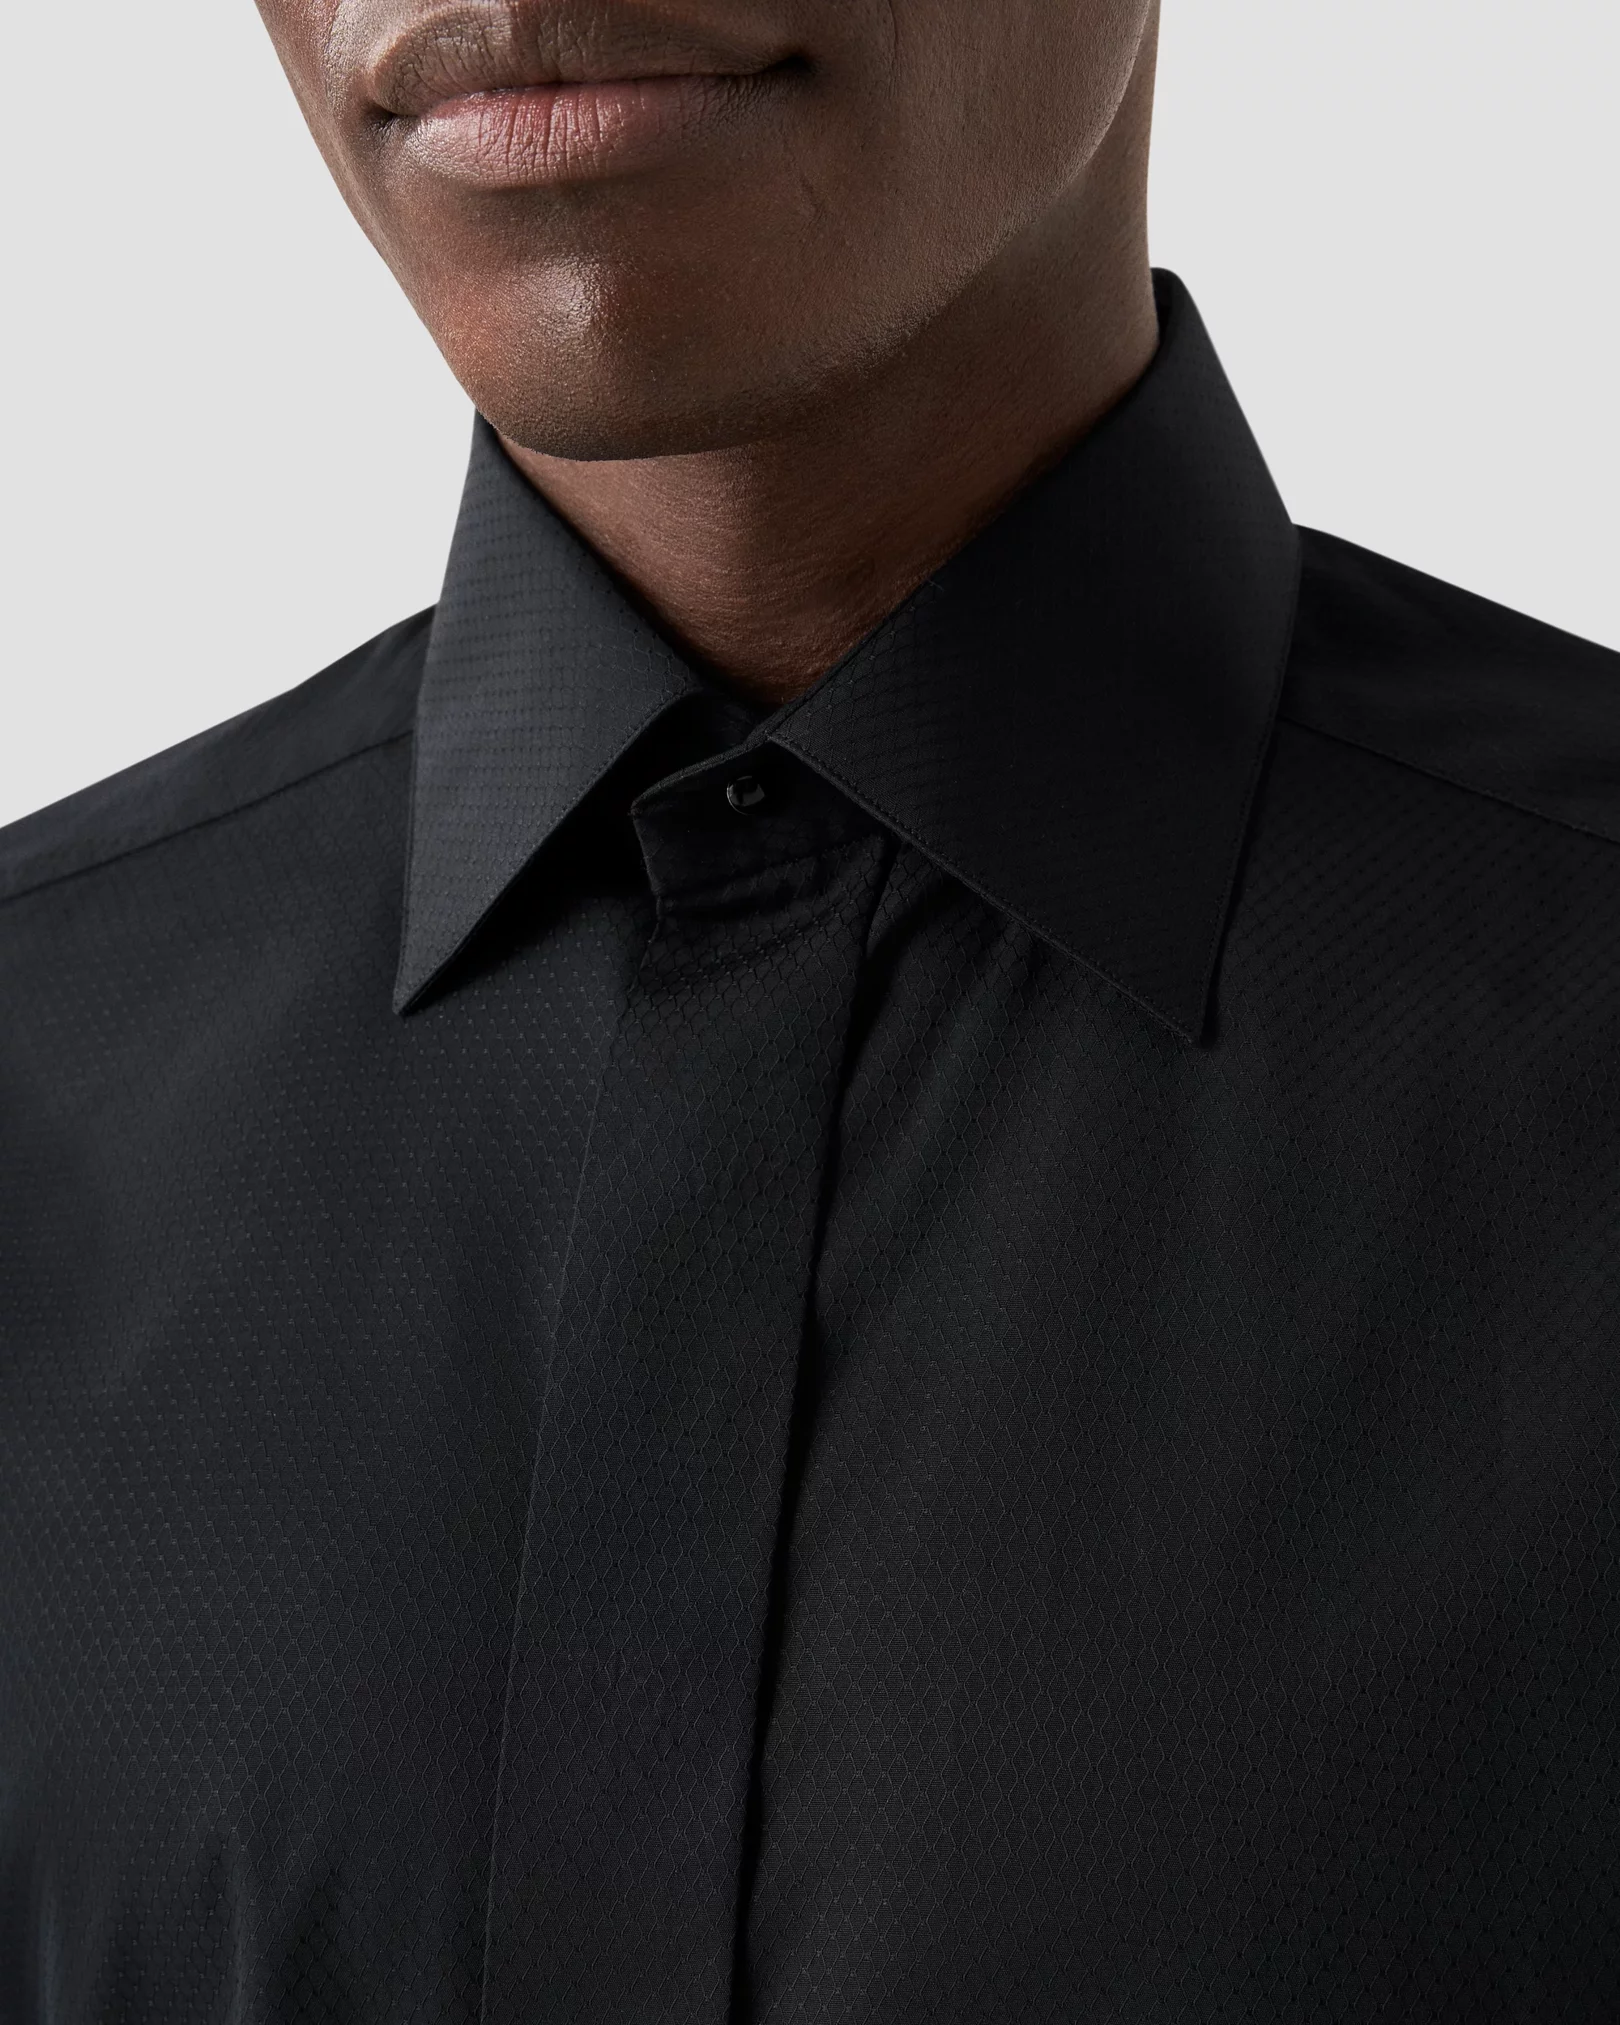 Eton - Black Geometric Print Dobby Tuxedo Shirt